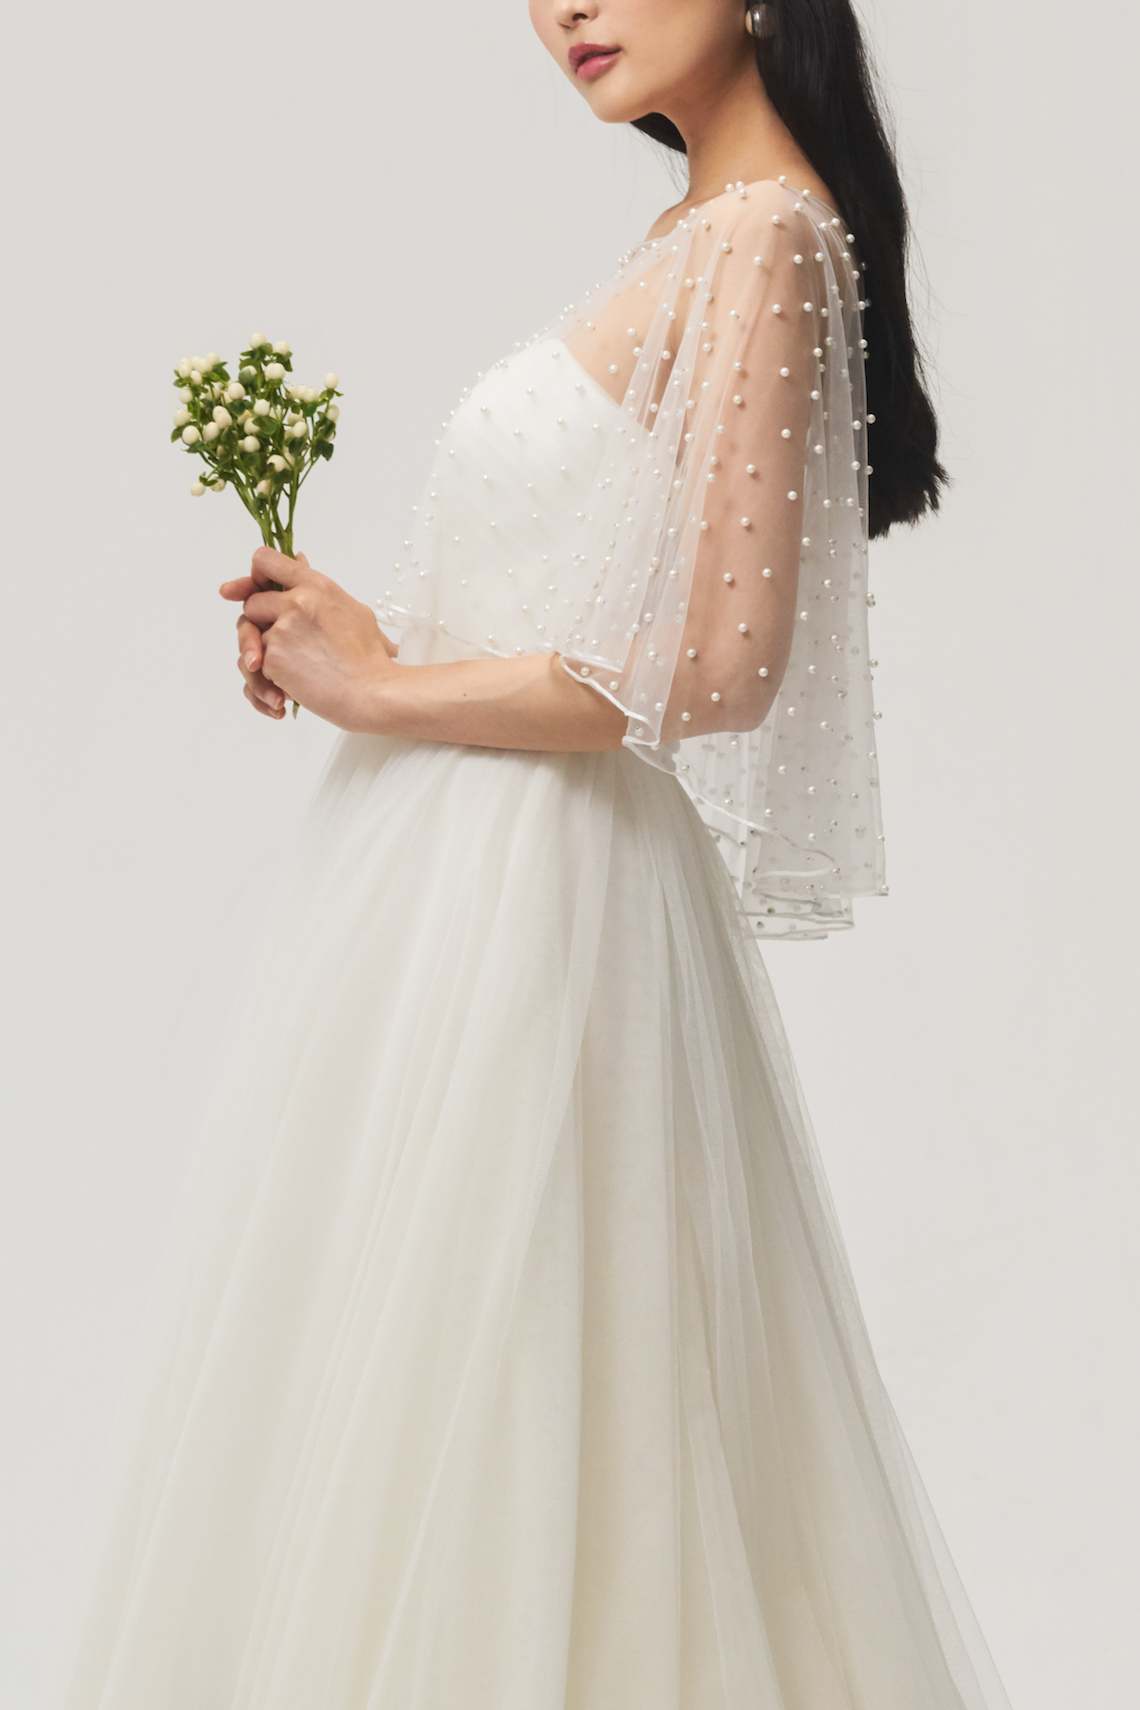 The Playful & Glamorous Jenny by Jenny Yoo 2018 Wedding Dress Collection | Fiona 1